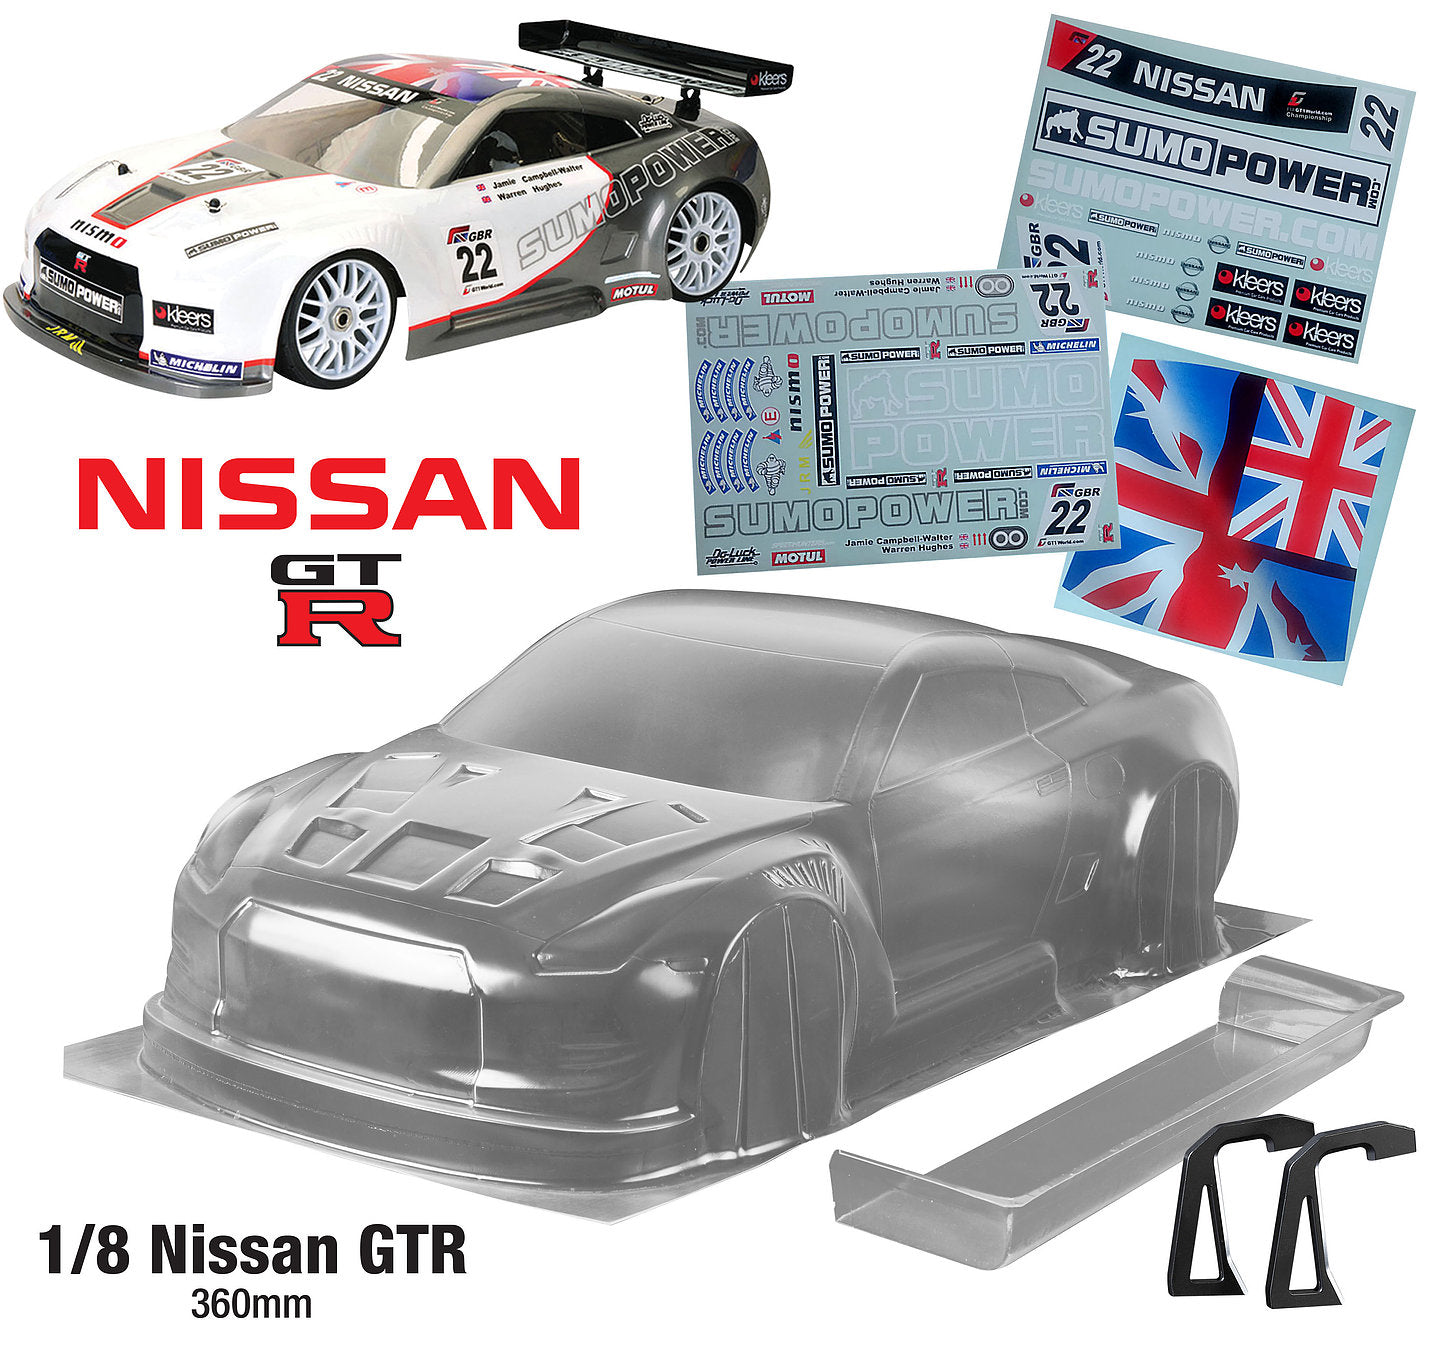 1/8 Nissan Skyline GTR (R35) bodyshell (360mm wheelbase